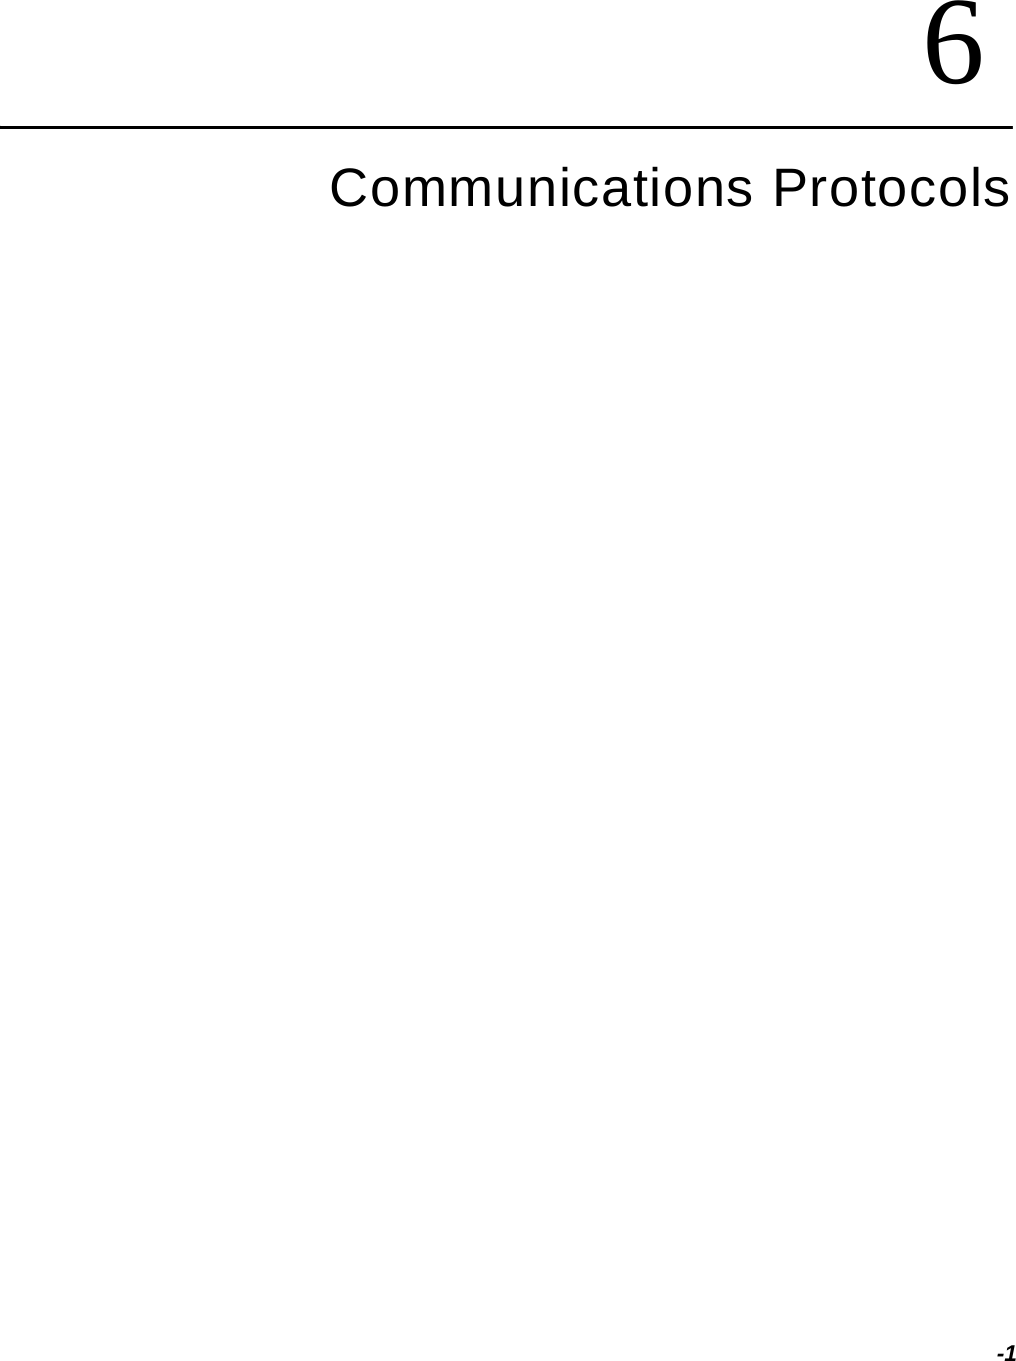 -16Communications Protocols